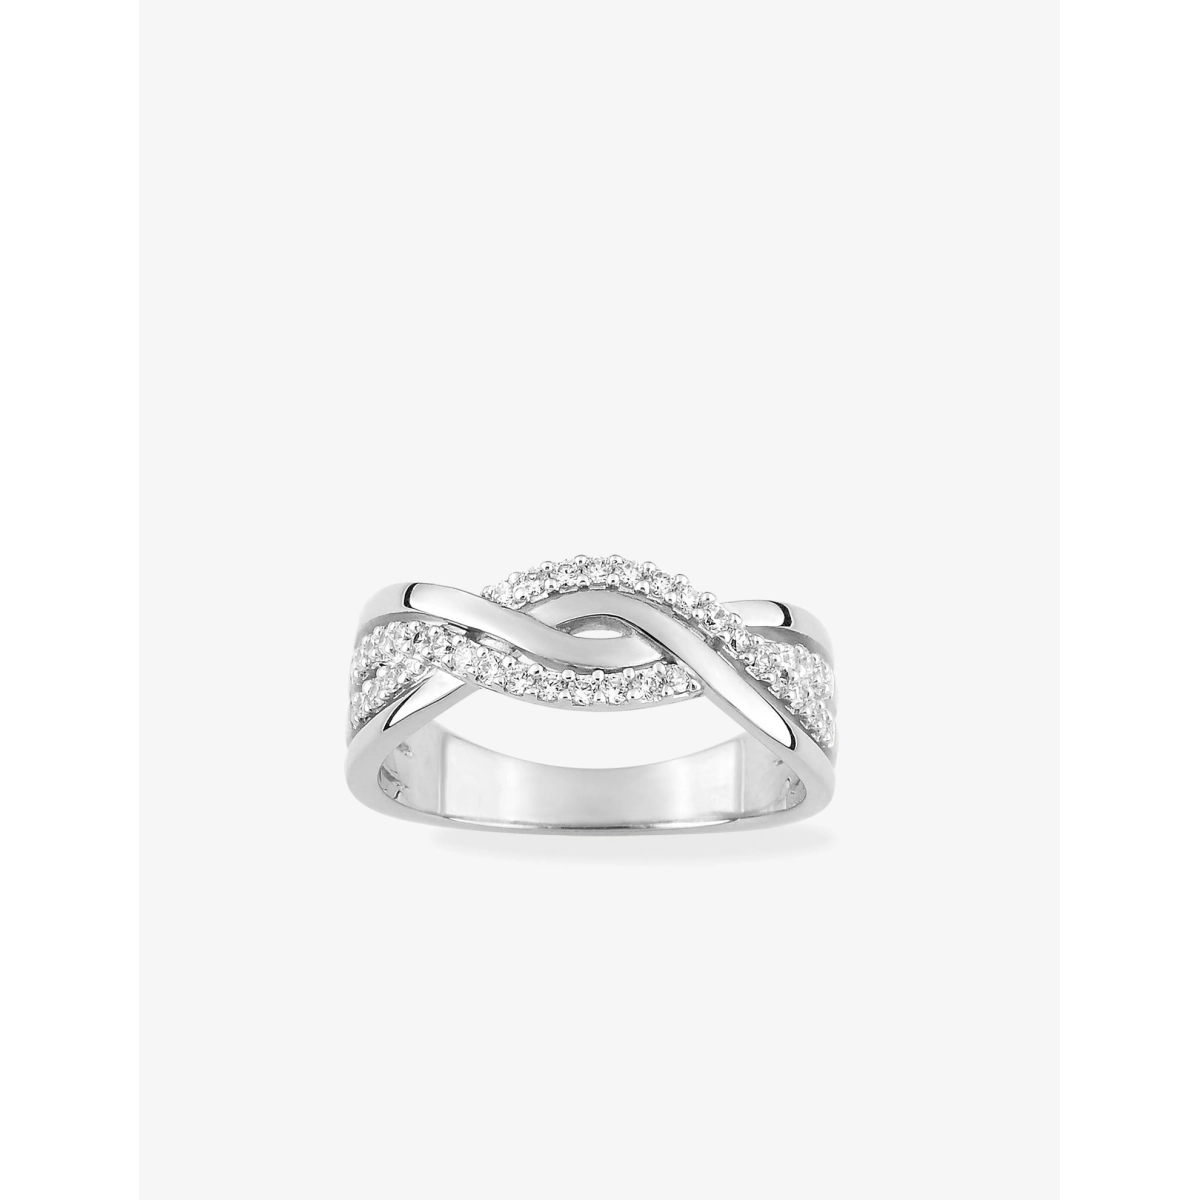 Ring w. cz rh925 Silver Lua Blanca  450163.9 - Size 51